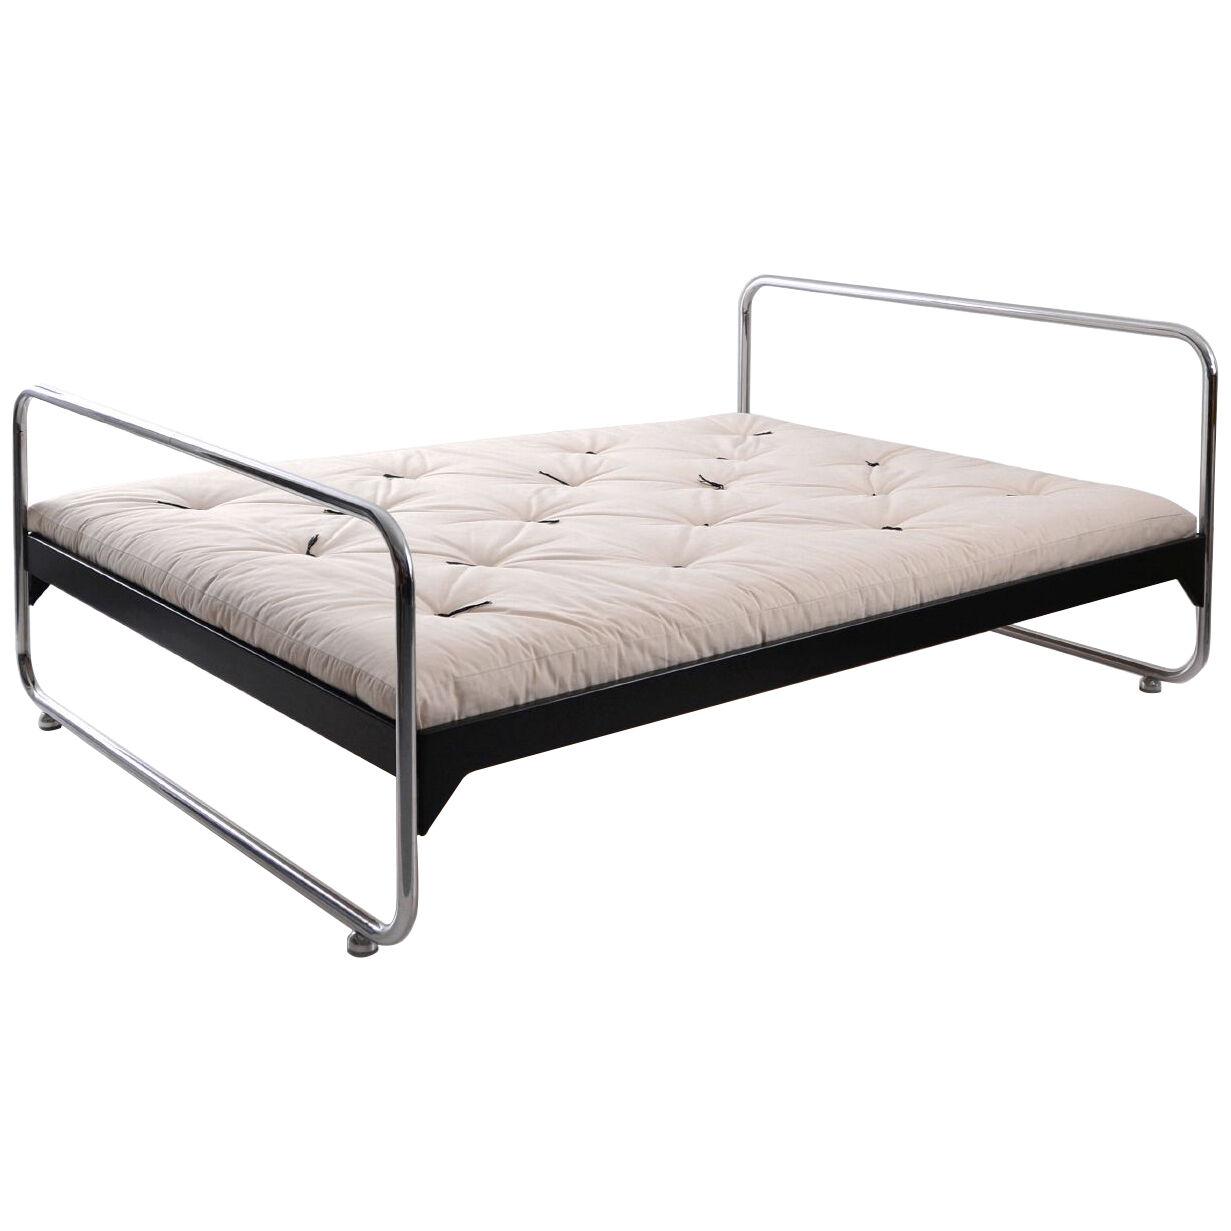 Modernist chrome-plated tubular steel futon bed